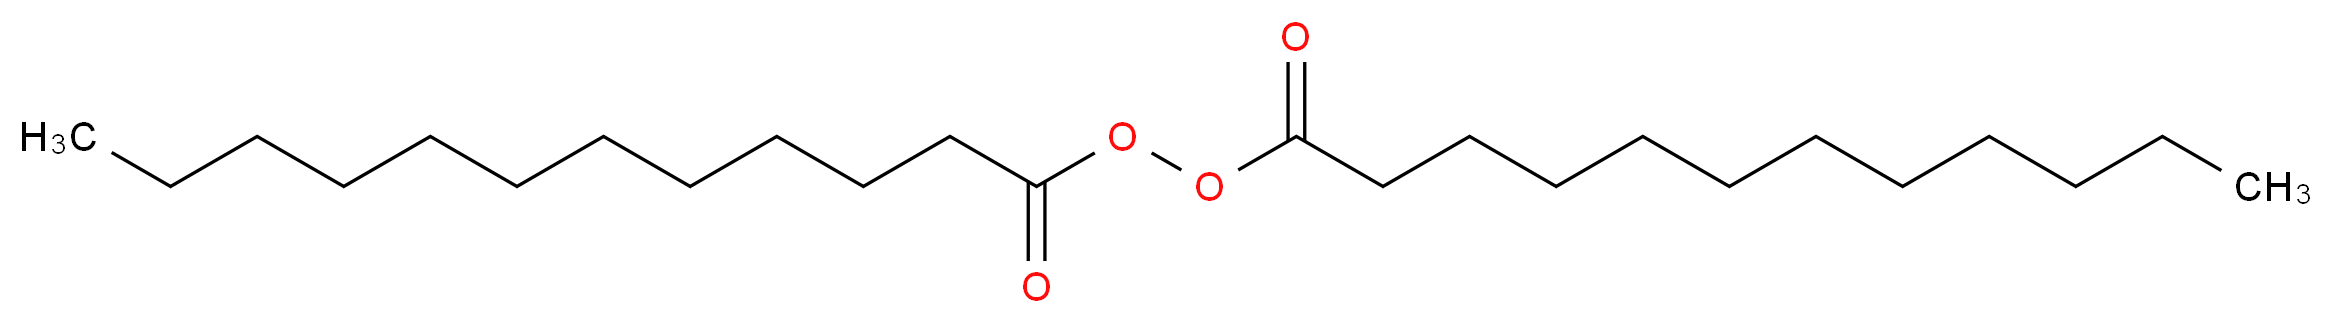 CAS_105-74-8 molecular structure